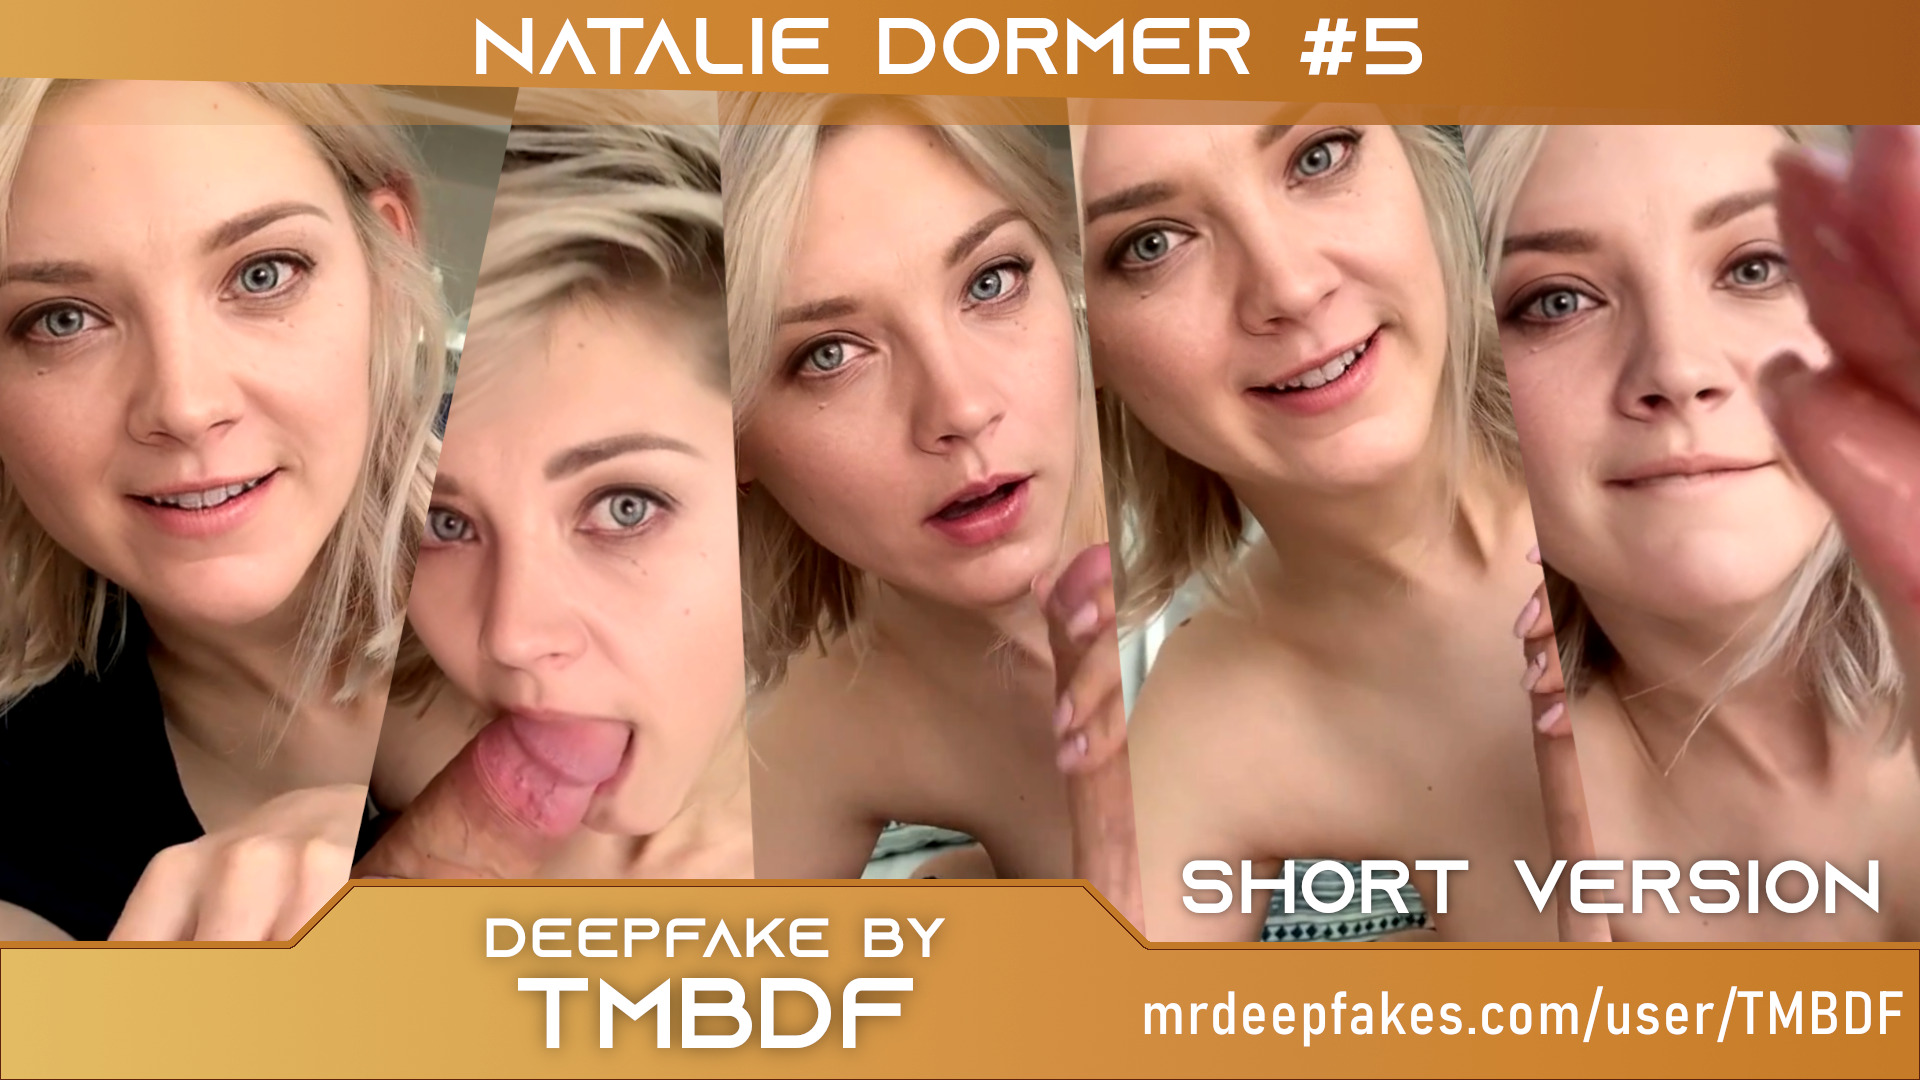 Natalie Dormer lookalike sucks your dick POV (short ver. 20:50) #5